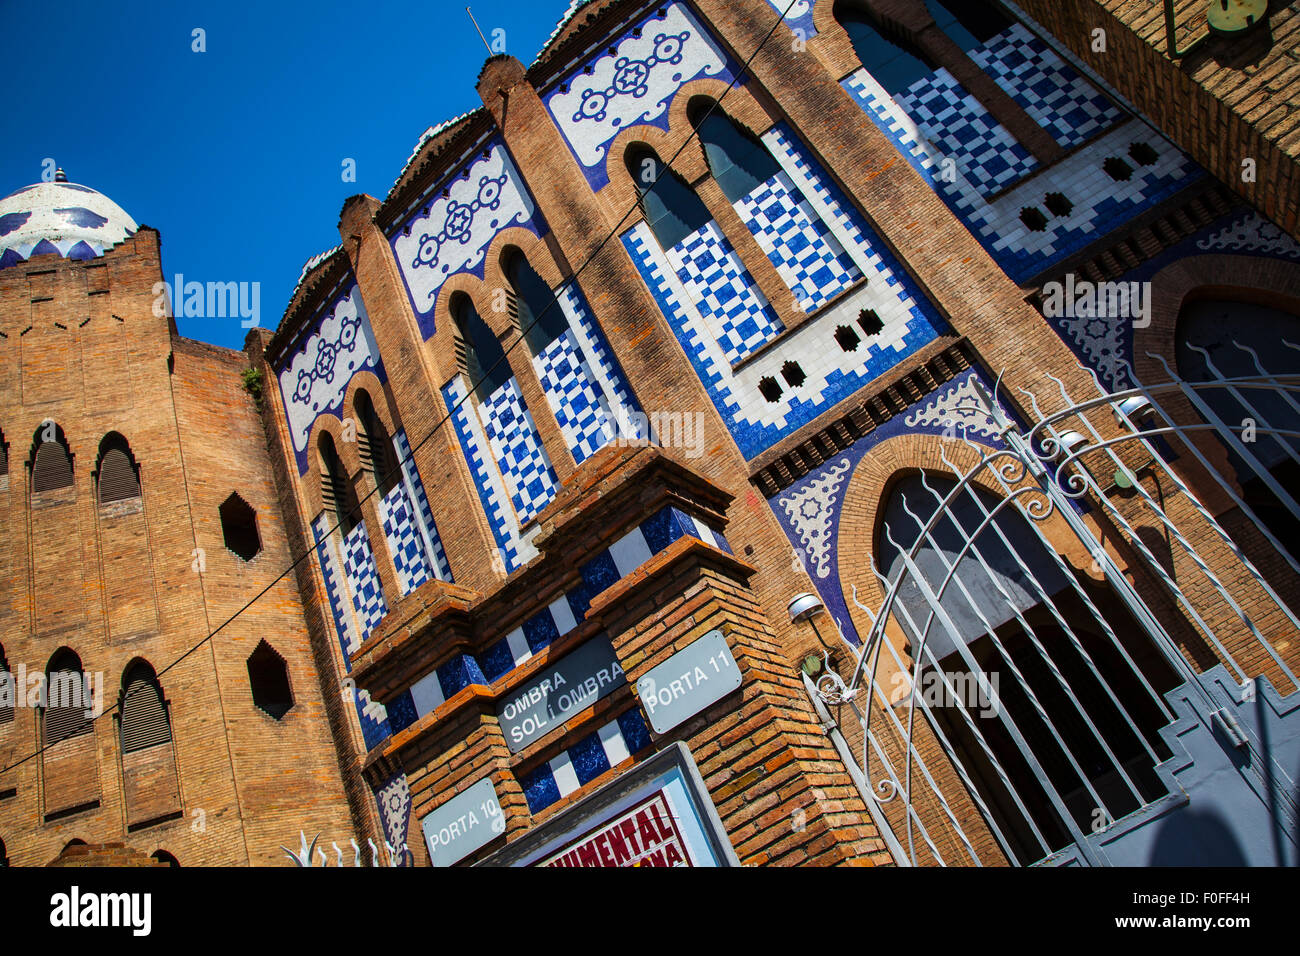 Plaza de Toros Monumental - Bullring of Barcelona, Catalonia, Spain Stock Photo